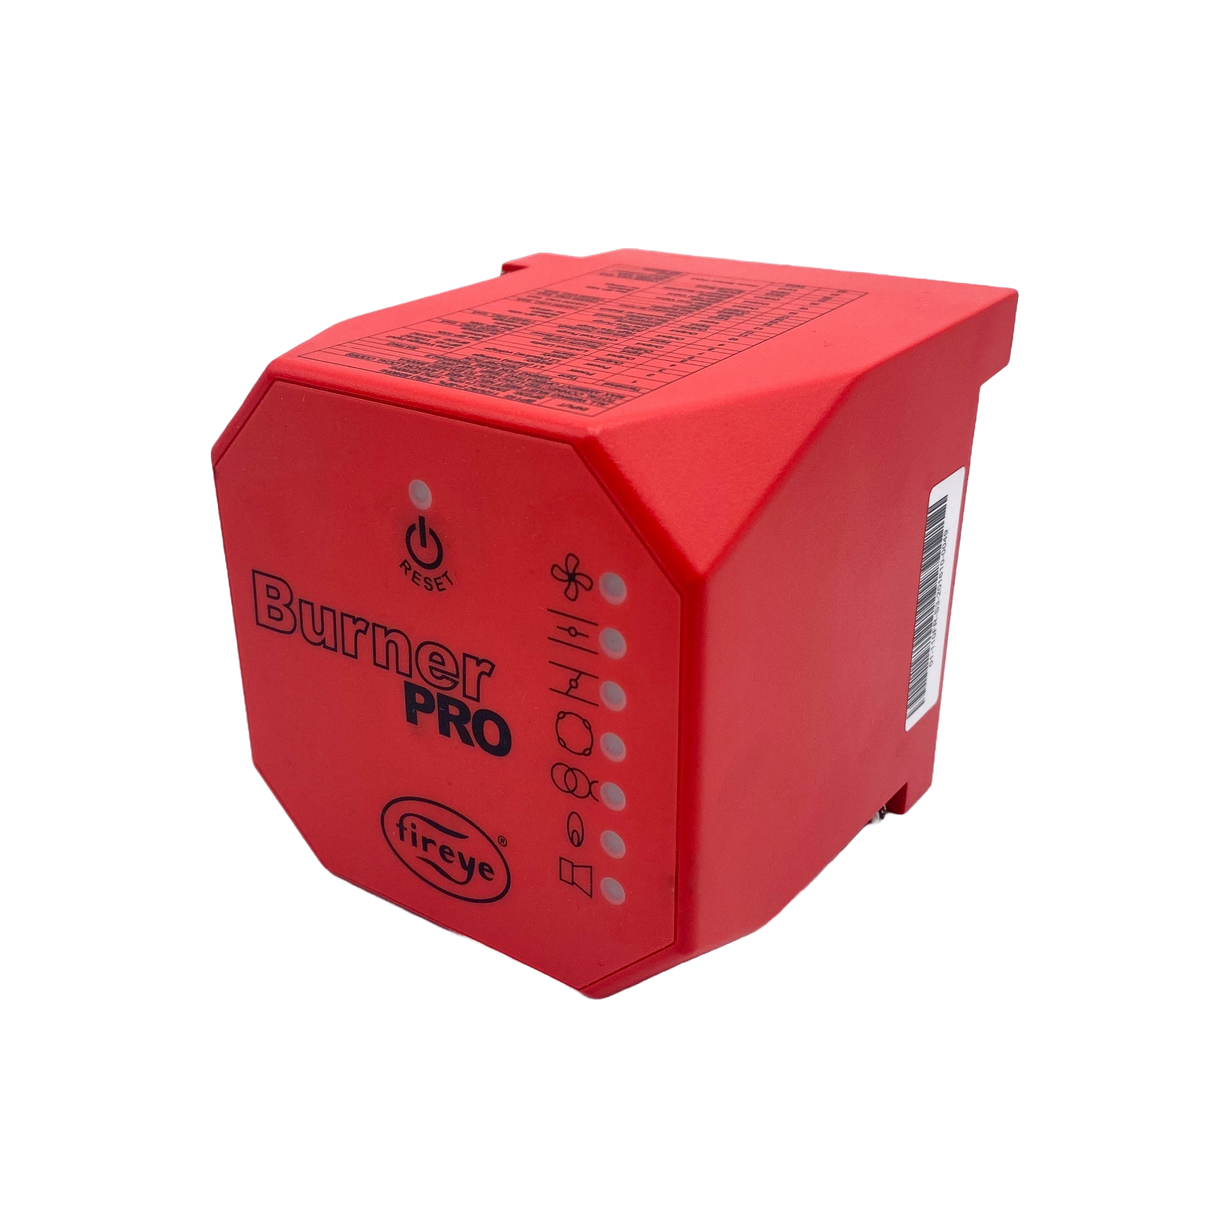 Fireye BurnerPRO Intelligent Flame Safeguard Control Box - Direct Replacement for Honeywell TMG 740-3 and Siemens LFL Models